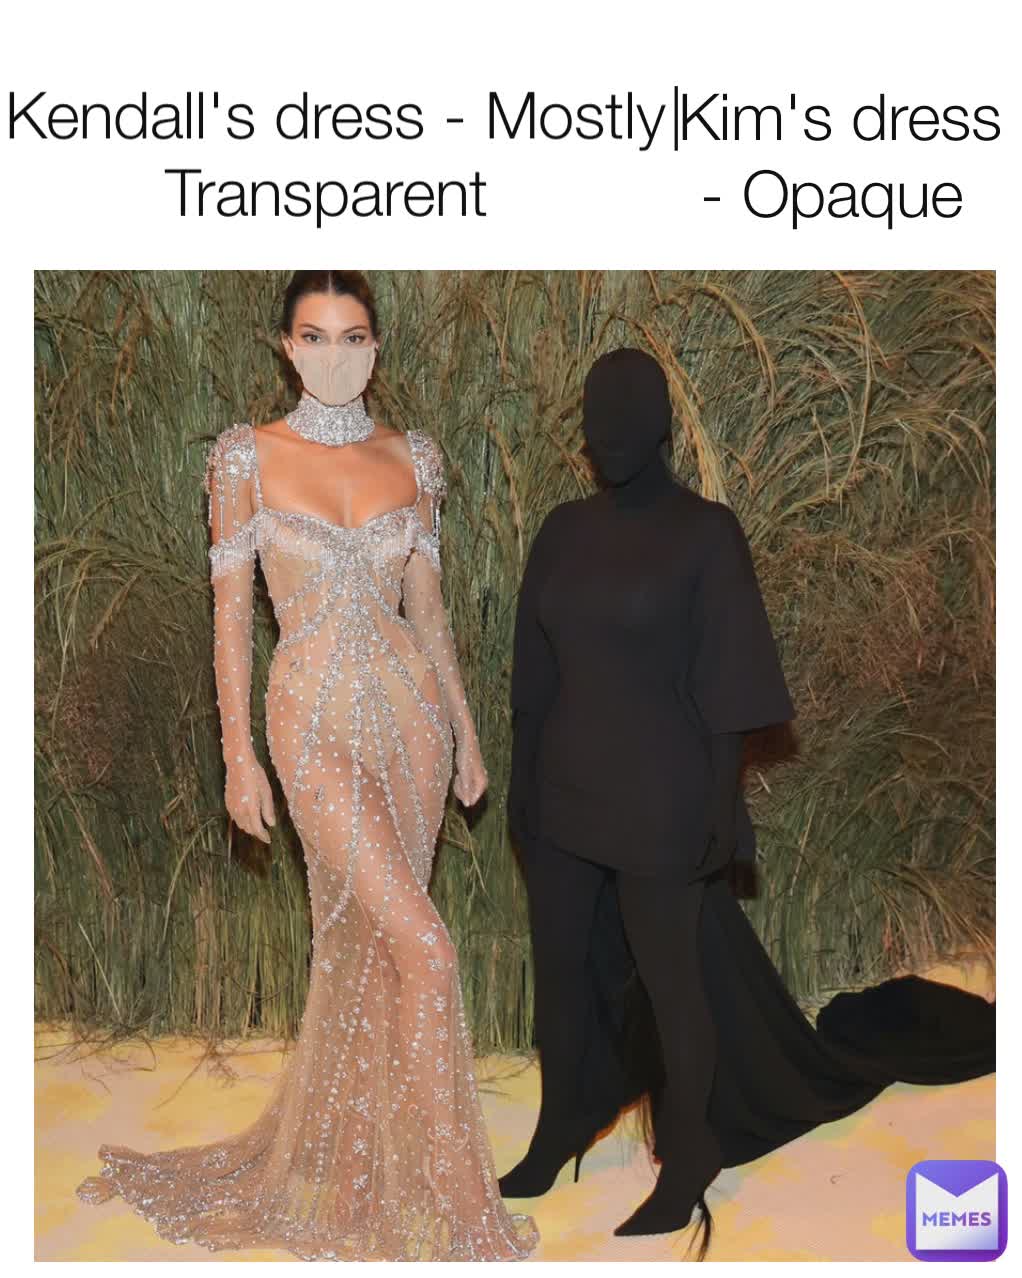 Kendall's dress - Mostly Transparent  Kim's dress - Opaque  |